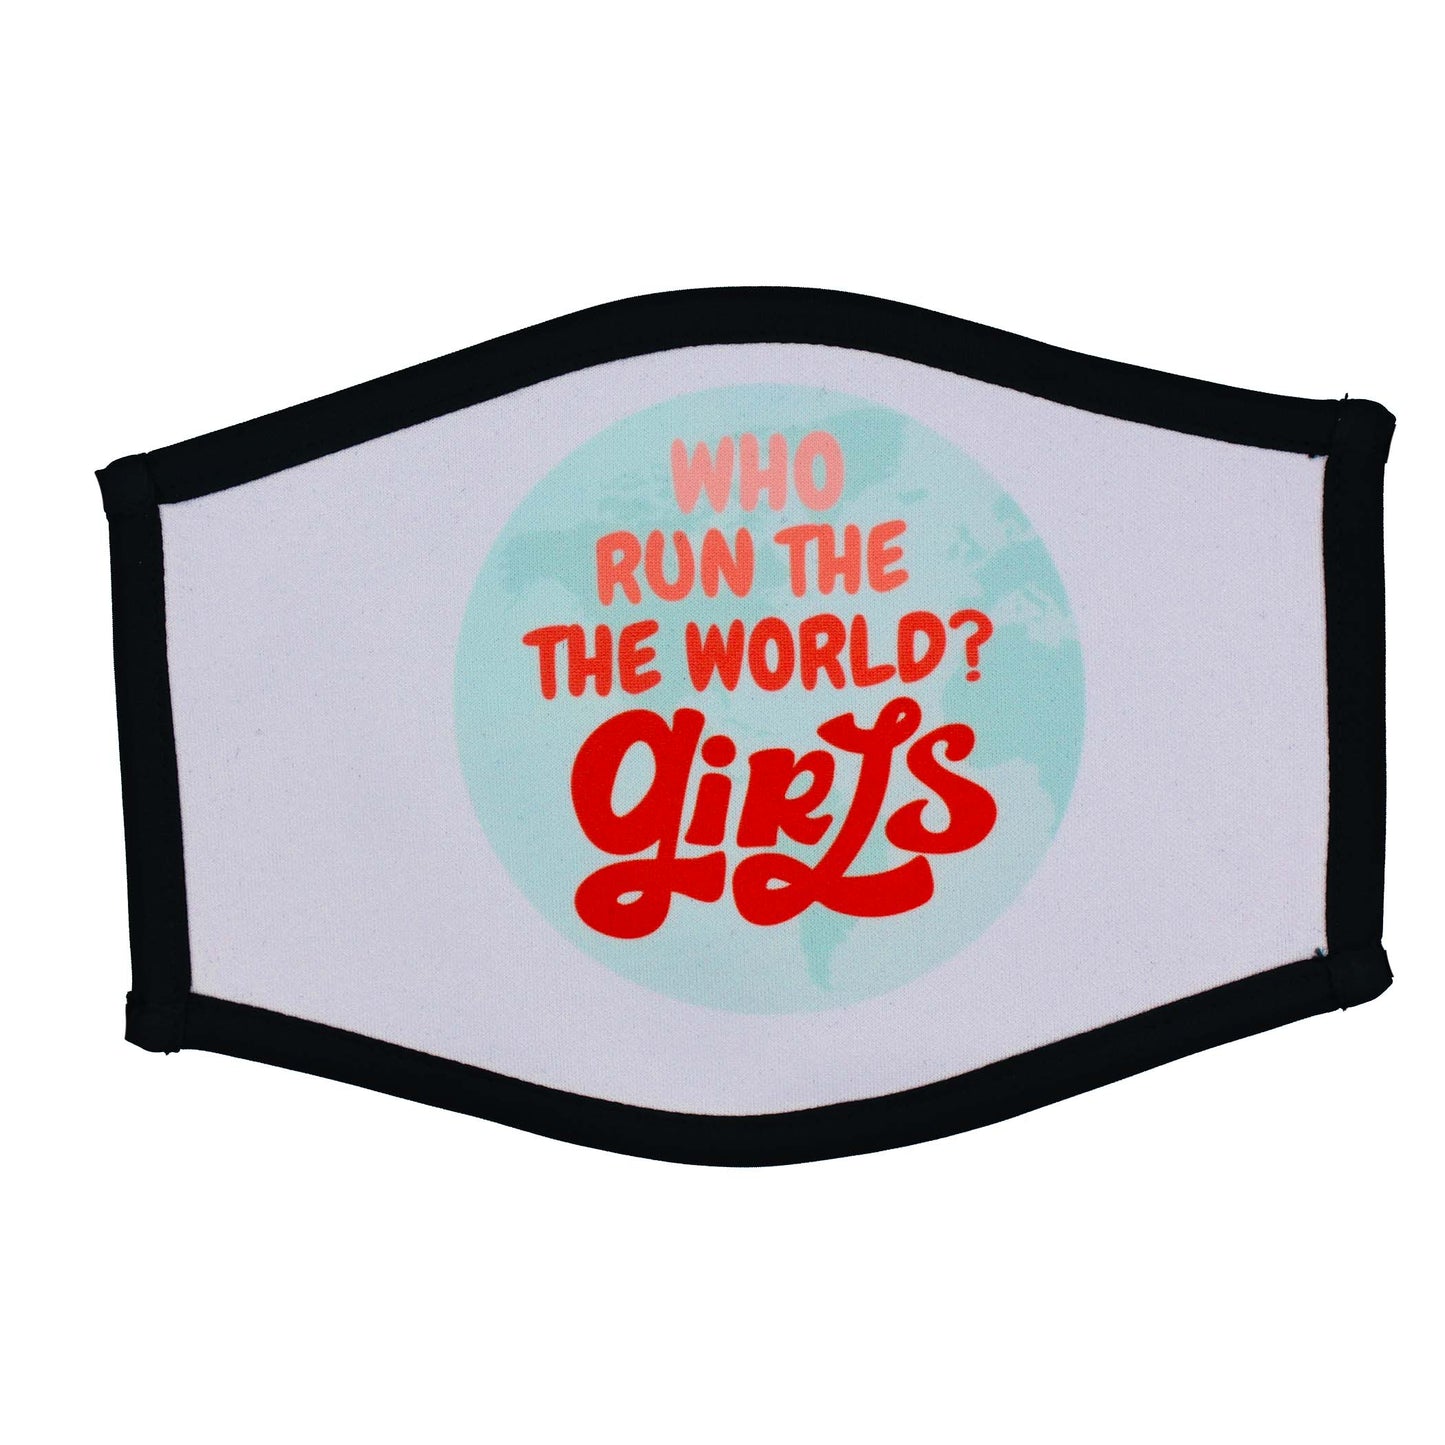 NEW--"WHO RUN THE WORLD?"  GIRLS